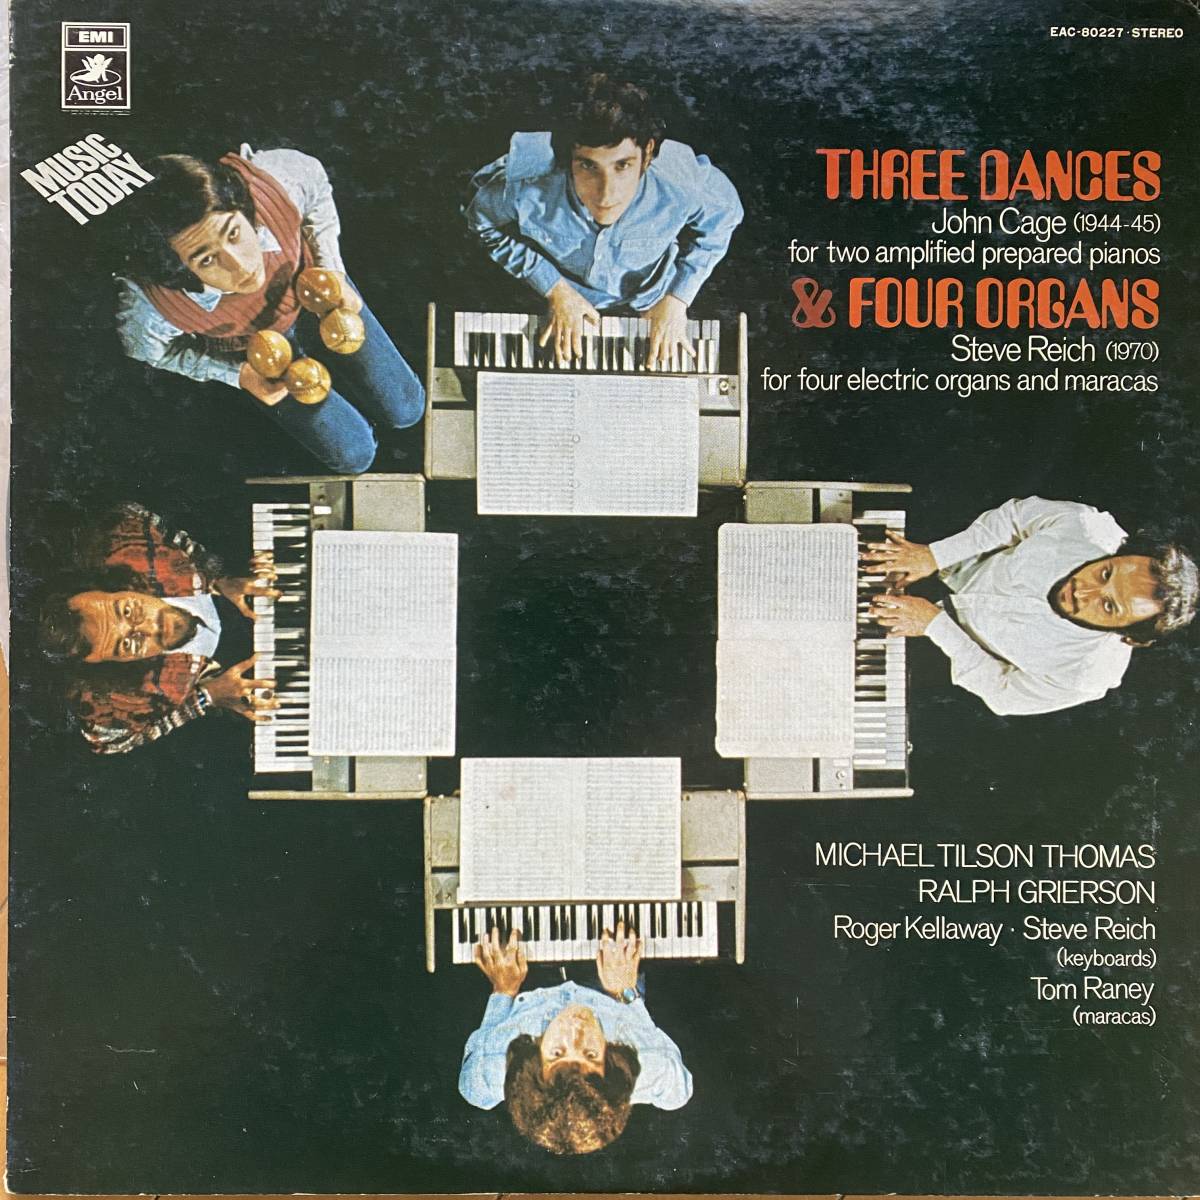 [Contemporary, Post-Modern] John Cage / Steve Reich - Three Dances & Four Organs / \'73 / John * клетка laihi Mini maru современная музыка 